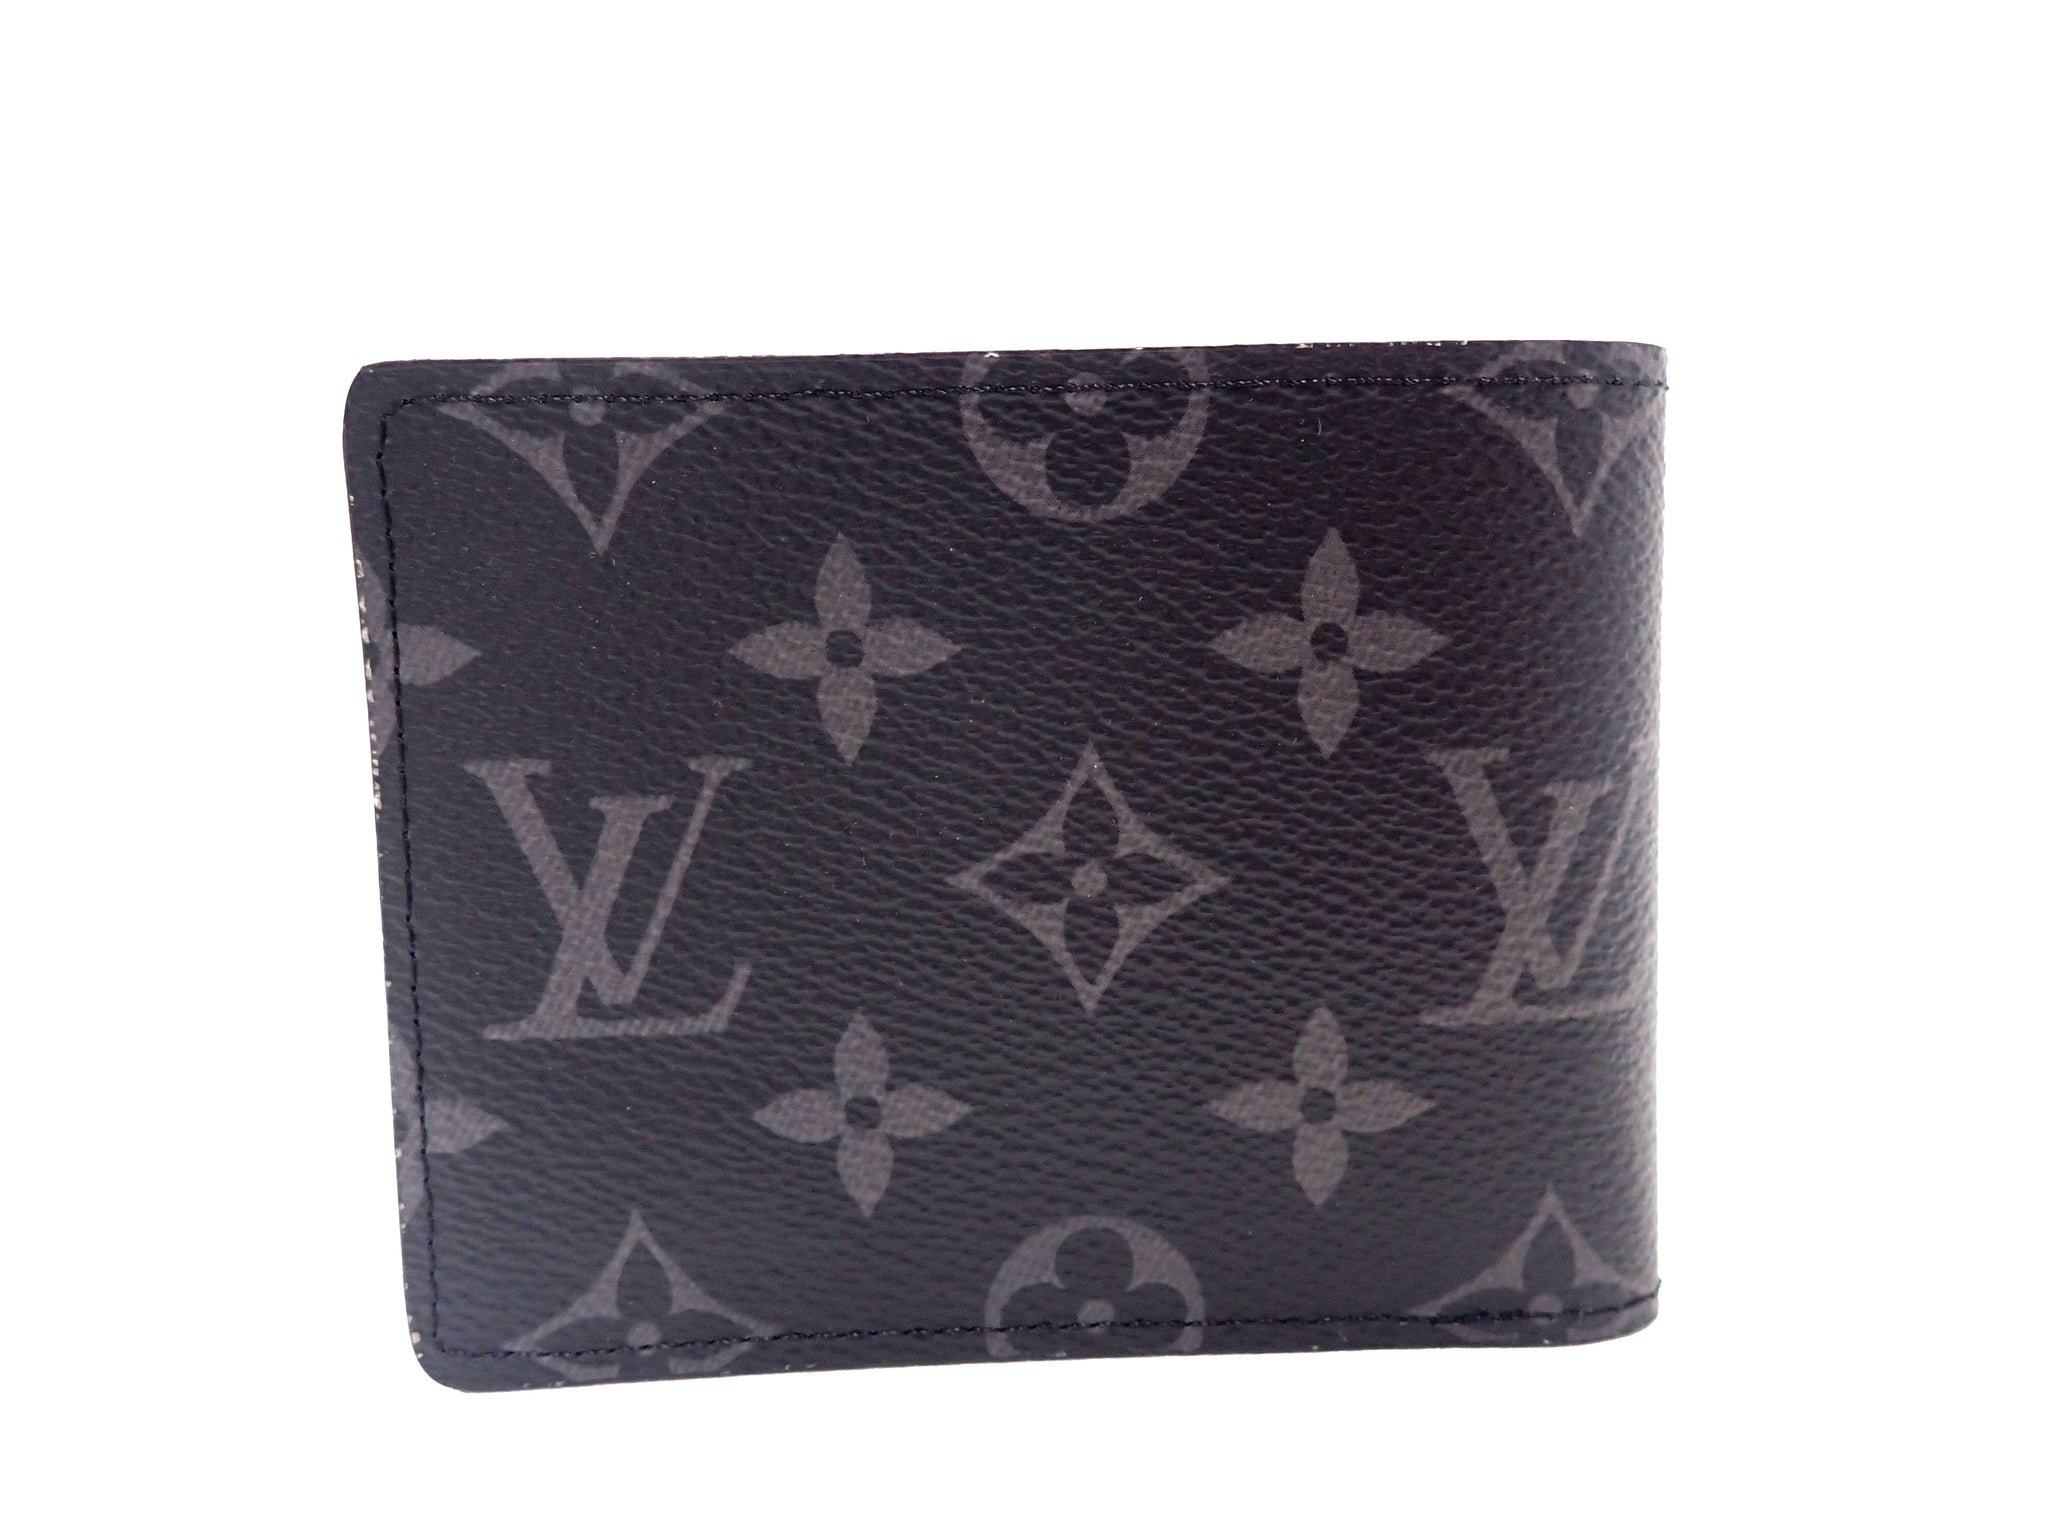 Louis Vuitton MONOGRAM Slender wallet (M62294)